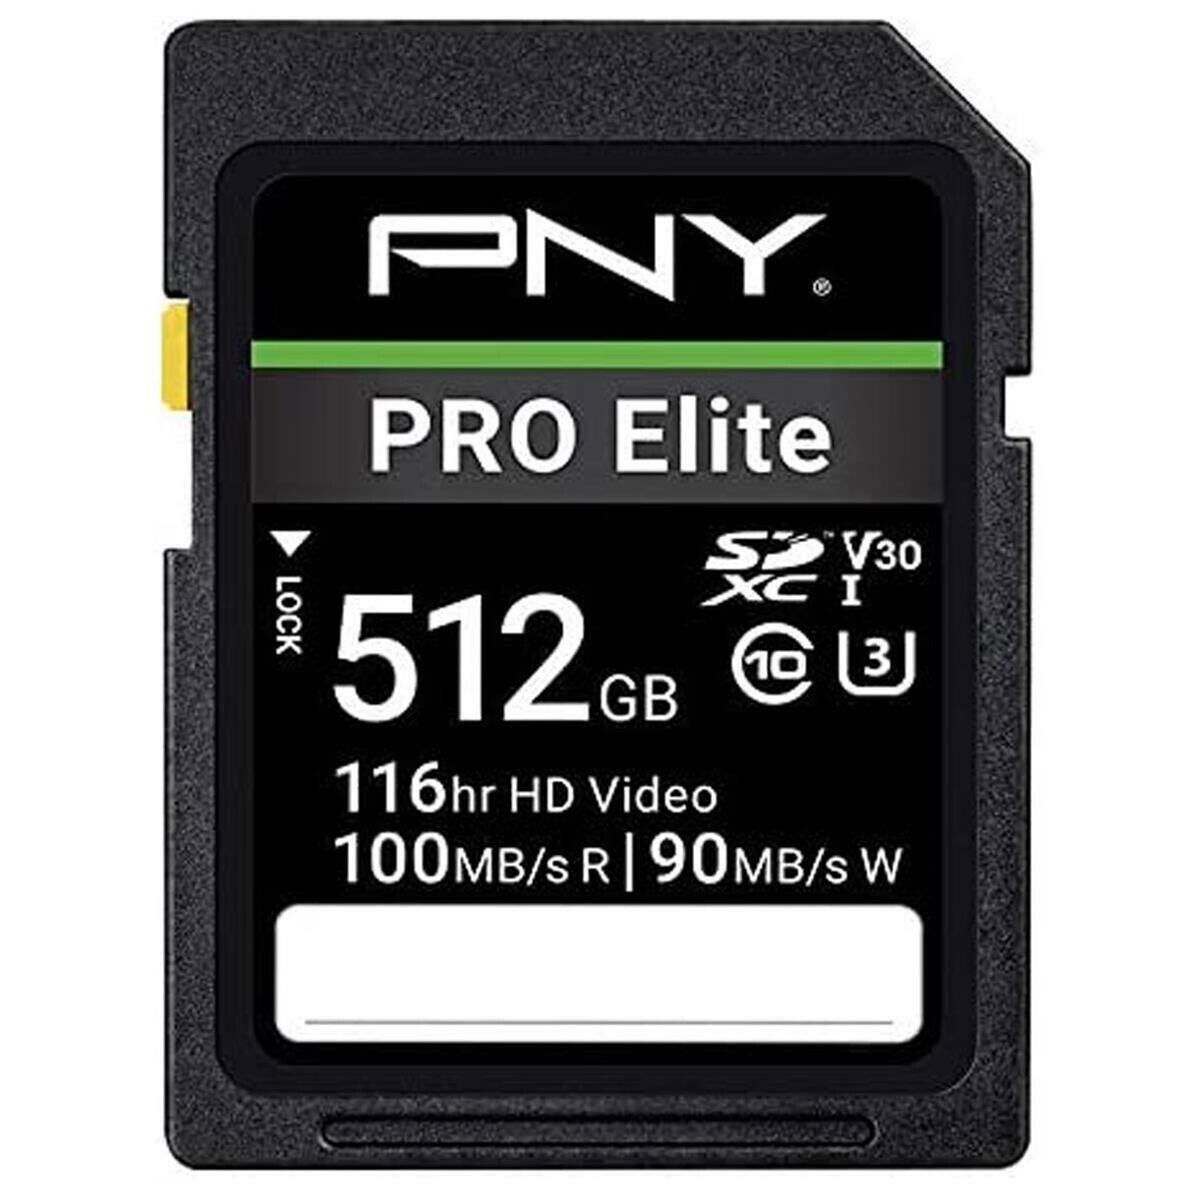 PNY 512GB PRO Elite Class 10 U3 V30 SDXC Flash Memory Card - 100MB/s